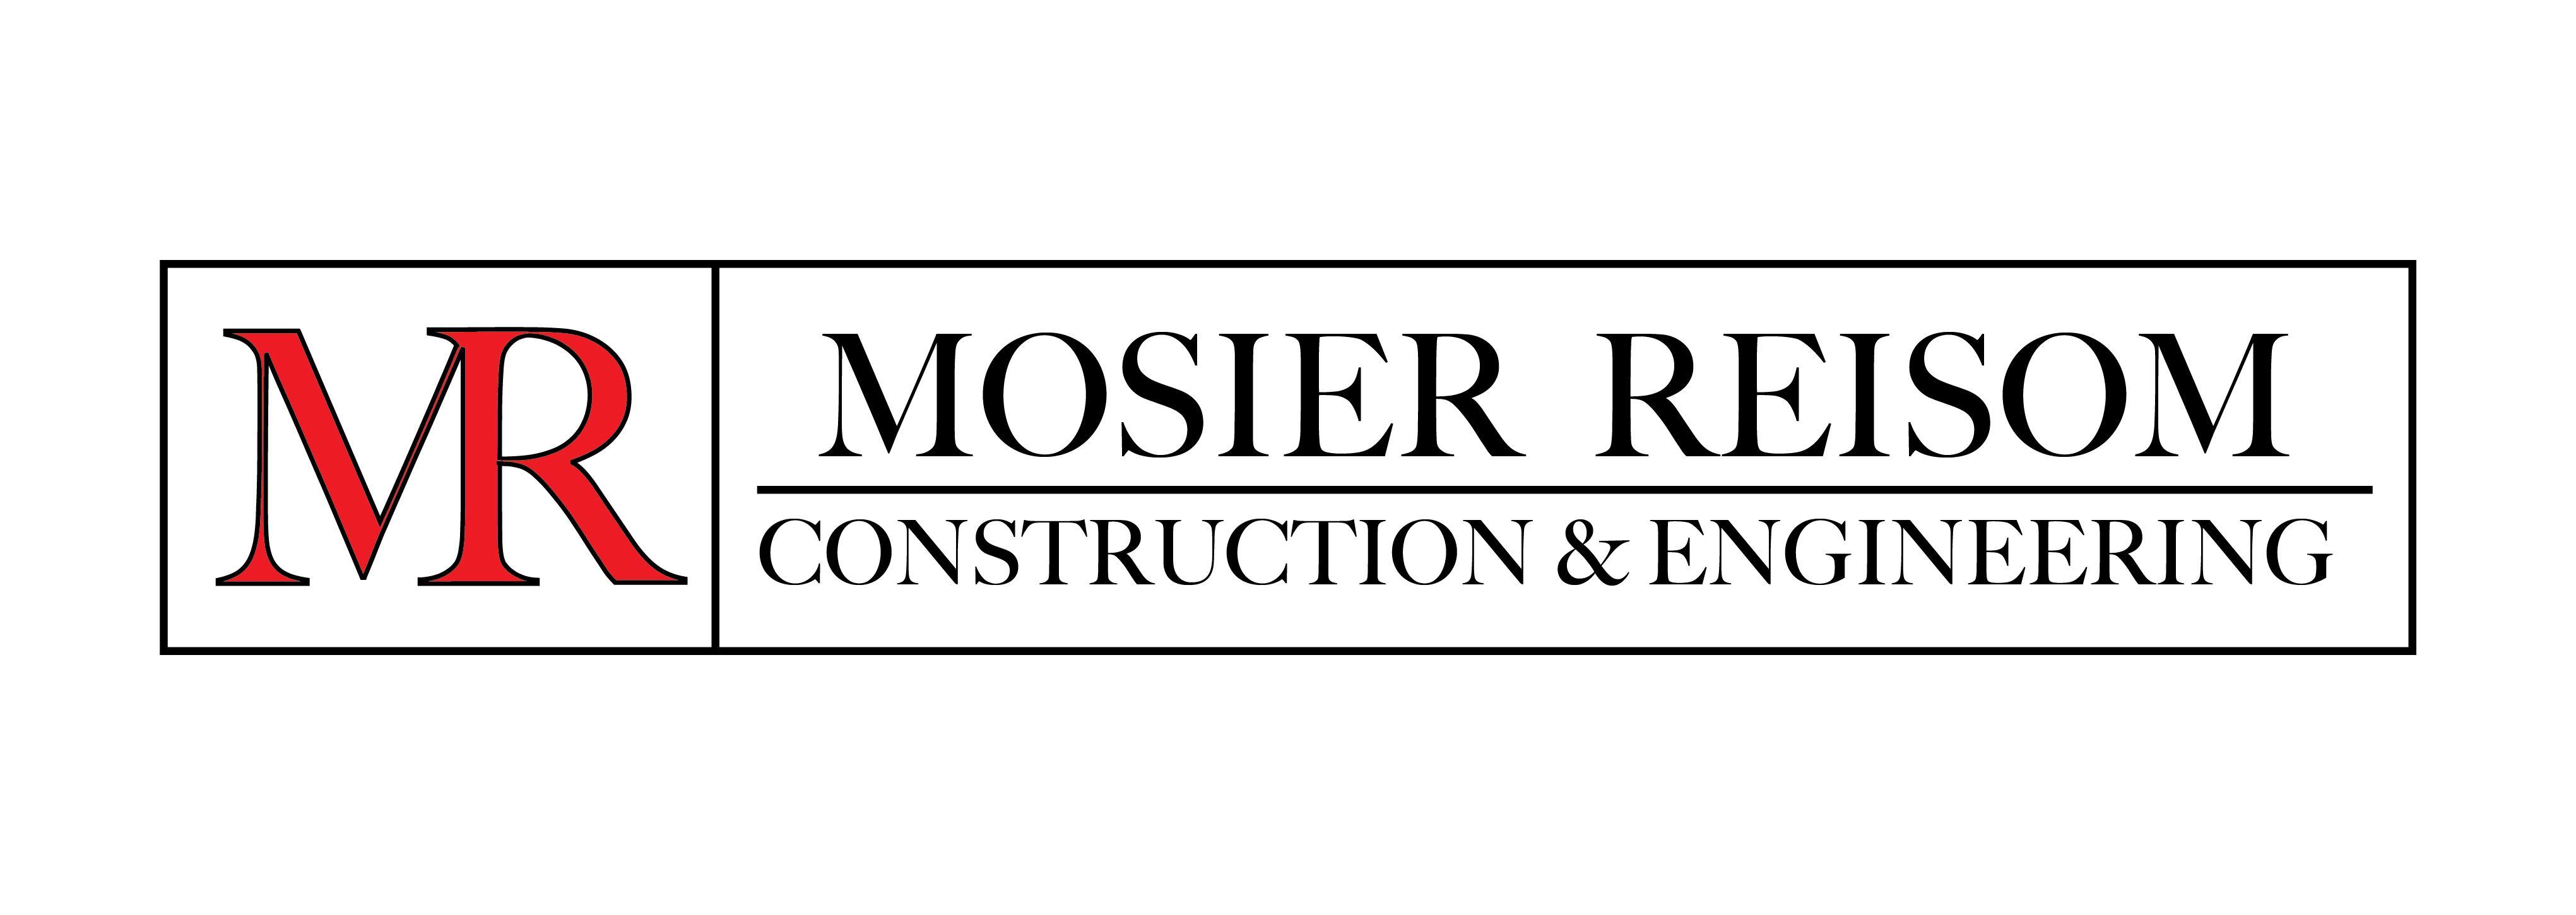 Mosier Reisom Construction & Engineering Logo